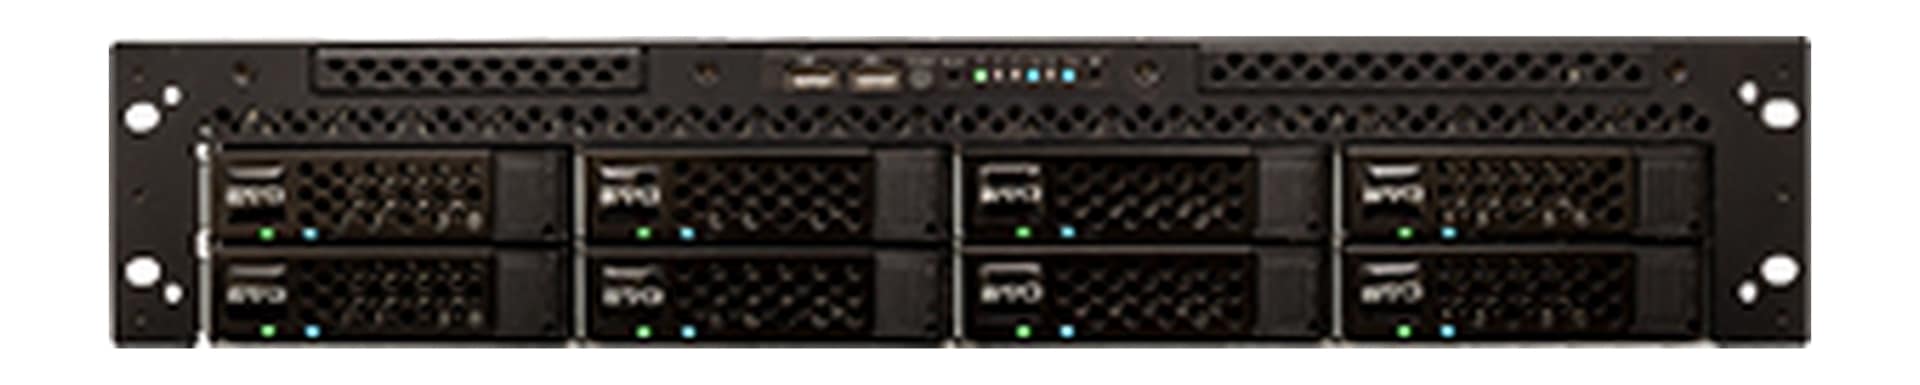 SNS EVO 2U 8 Bay Shared Storage Server with 60.8TB Raw Capacity Solid State Drive